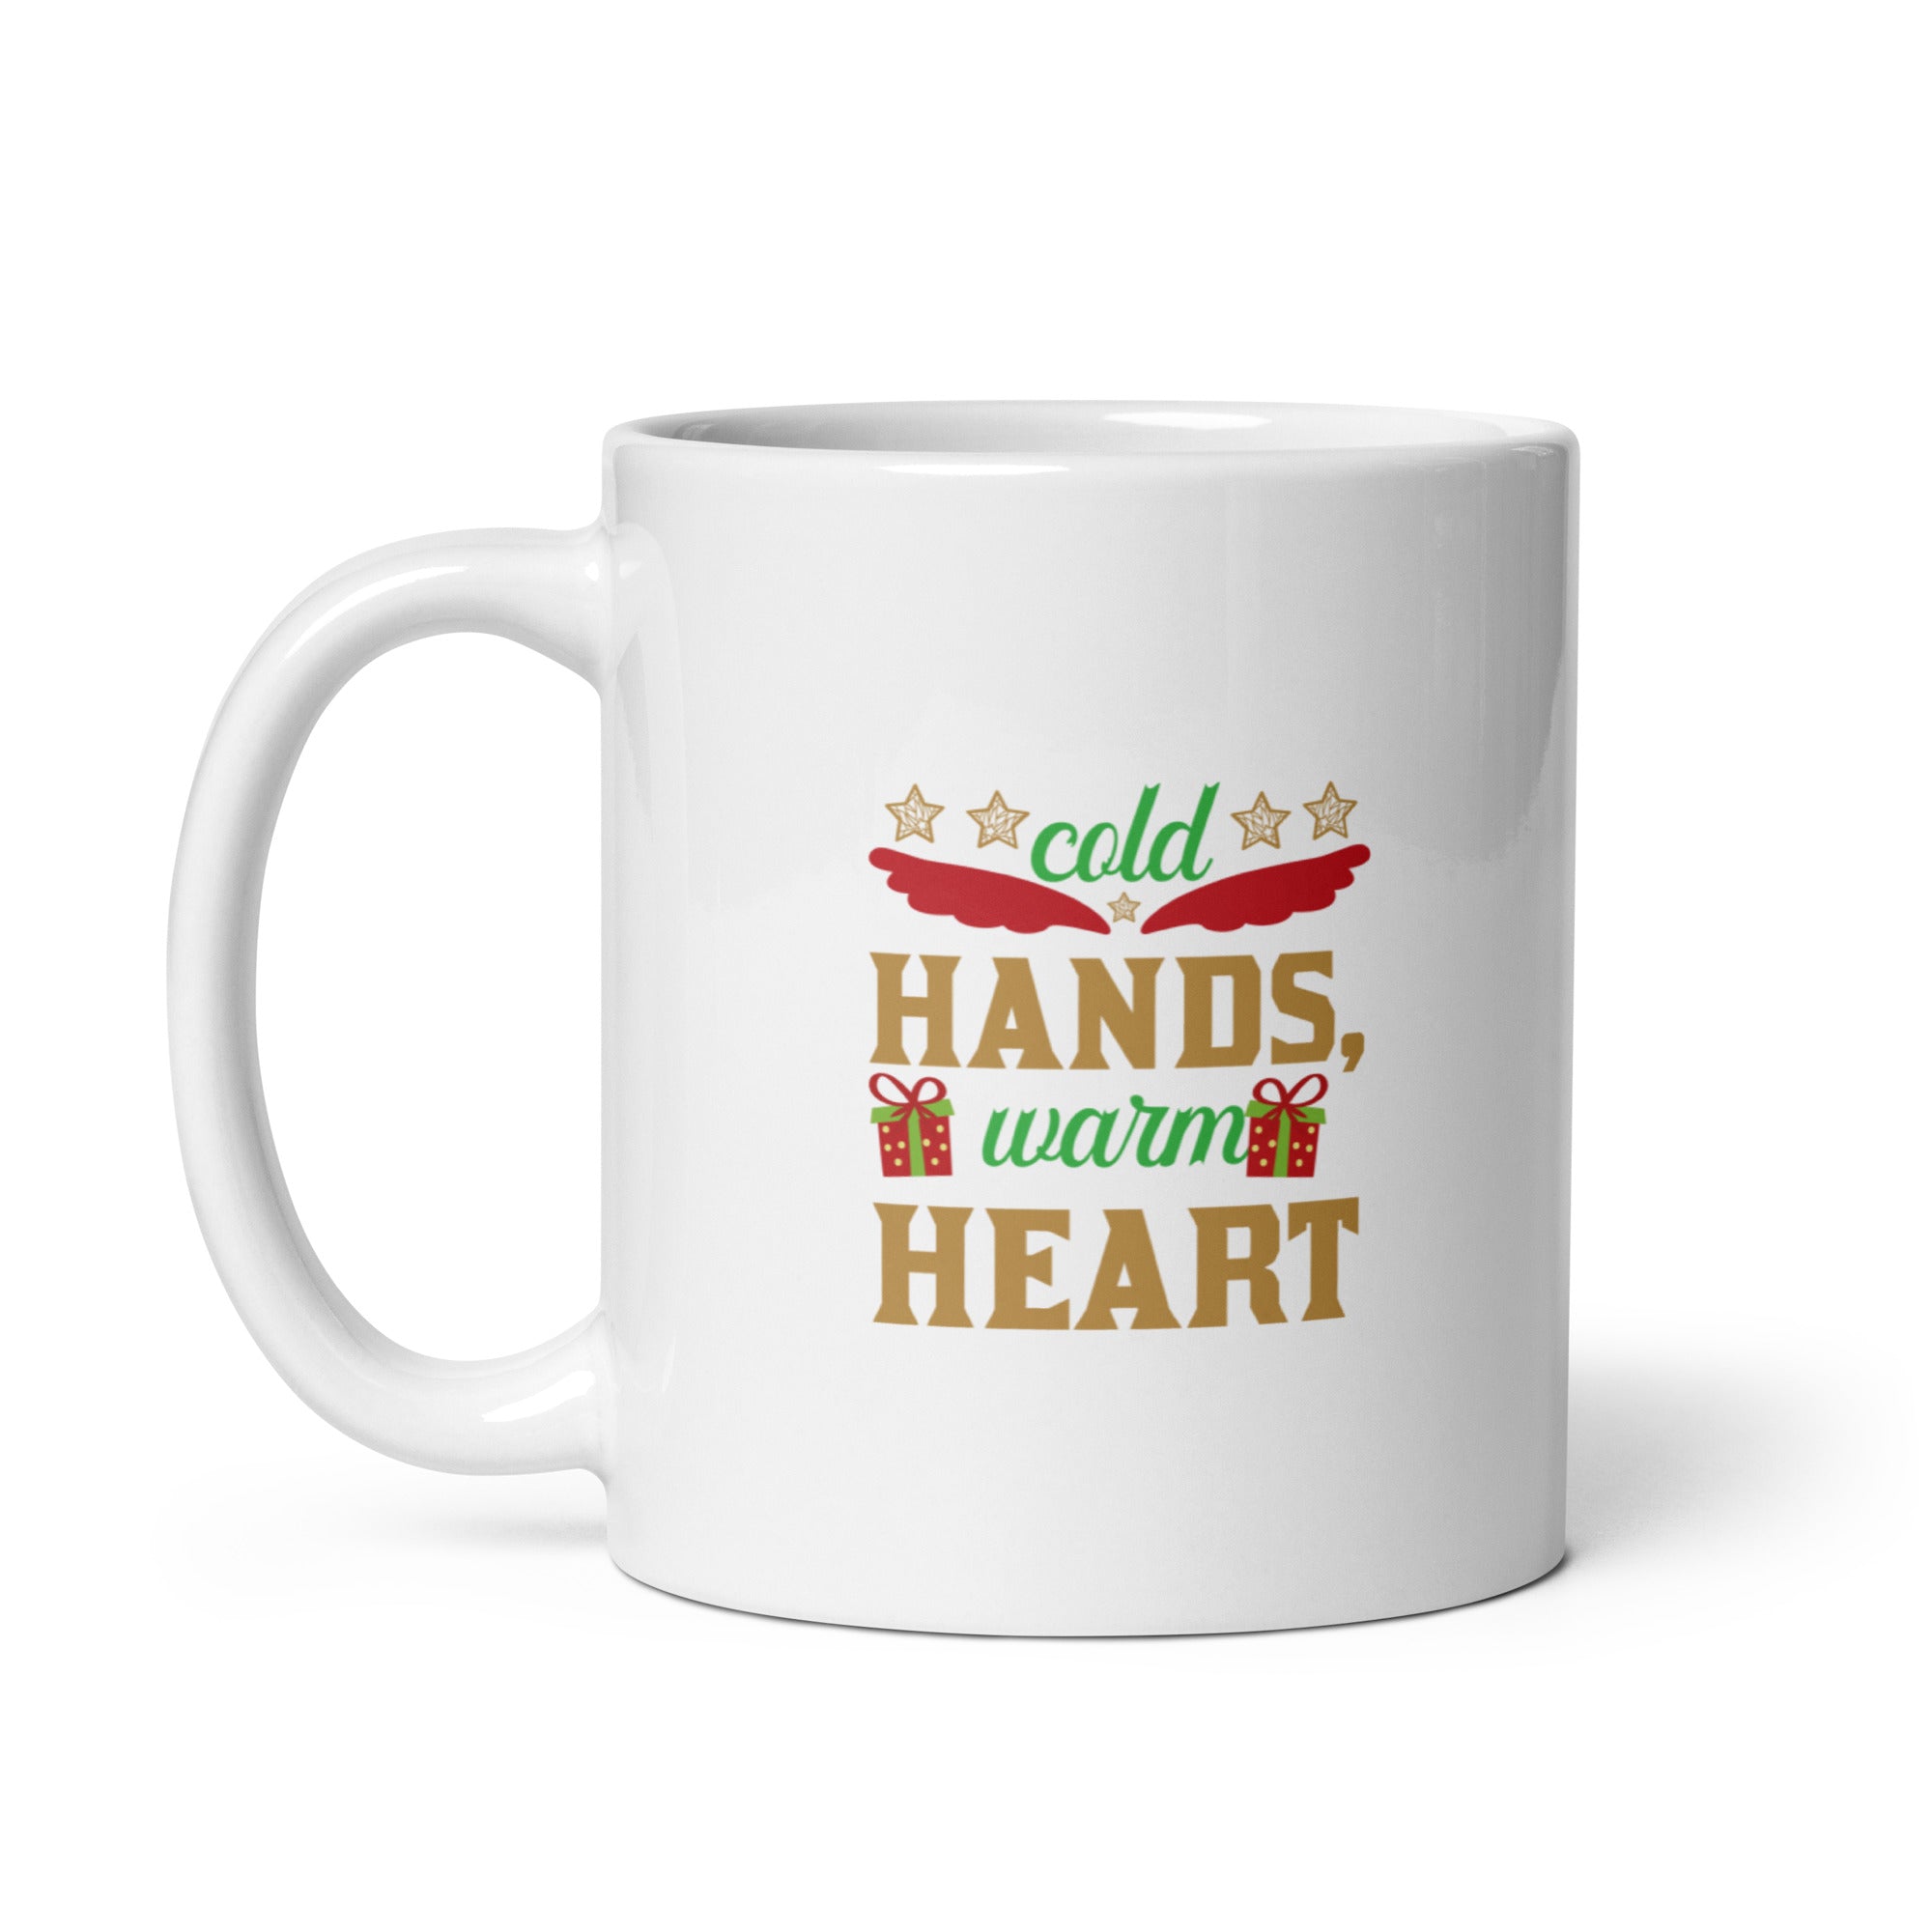 Cold Hands Warm Hearts - White glossy mug